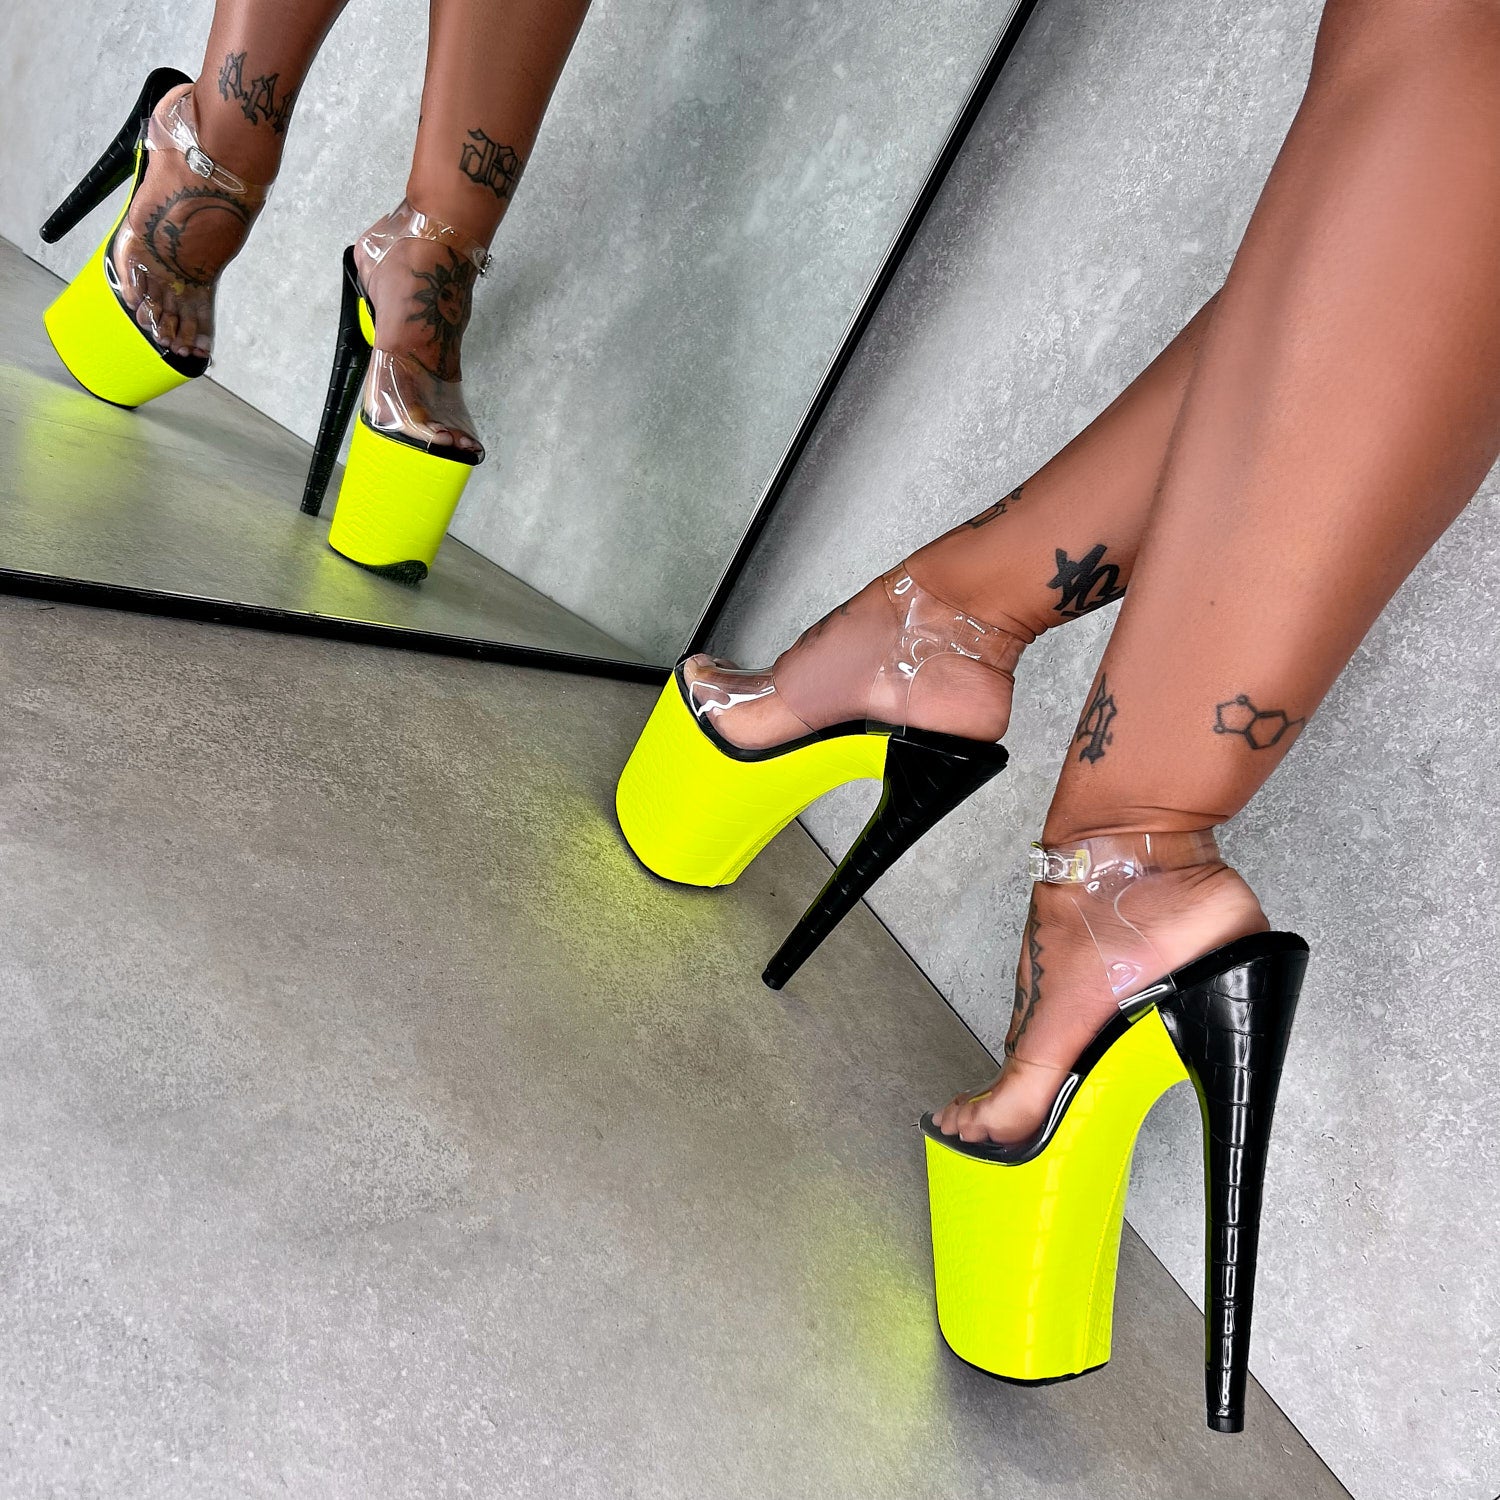 SNAPPED Black/Neon Stiletto - 8INCH, stripper shoe, stripper heel, pole heel, not a pleaser, platform, dancer, pole dance, floor work